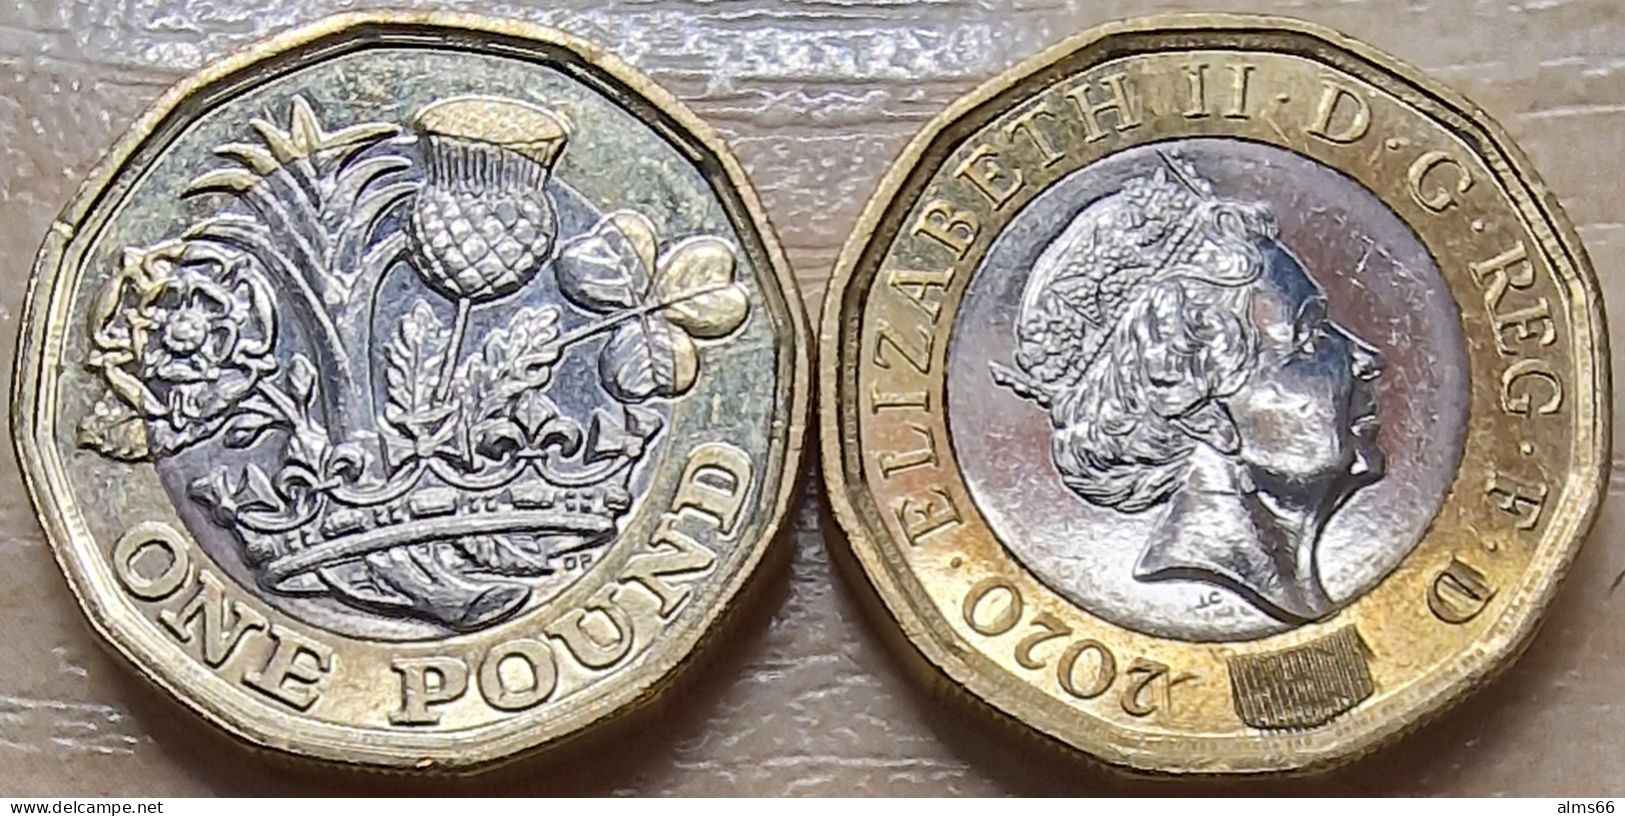 Great Britain UK 1 Pound 2020 AUNC - 1 Pound